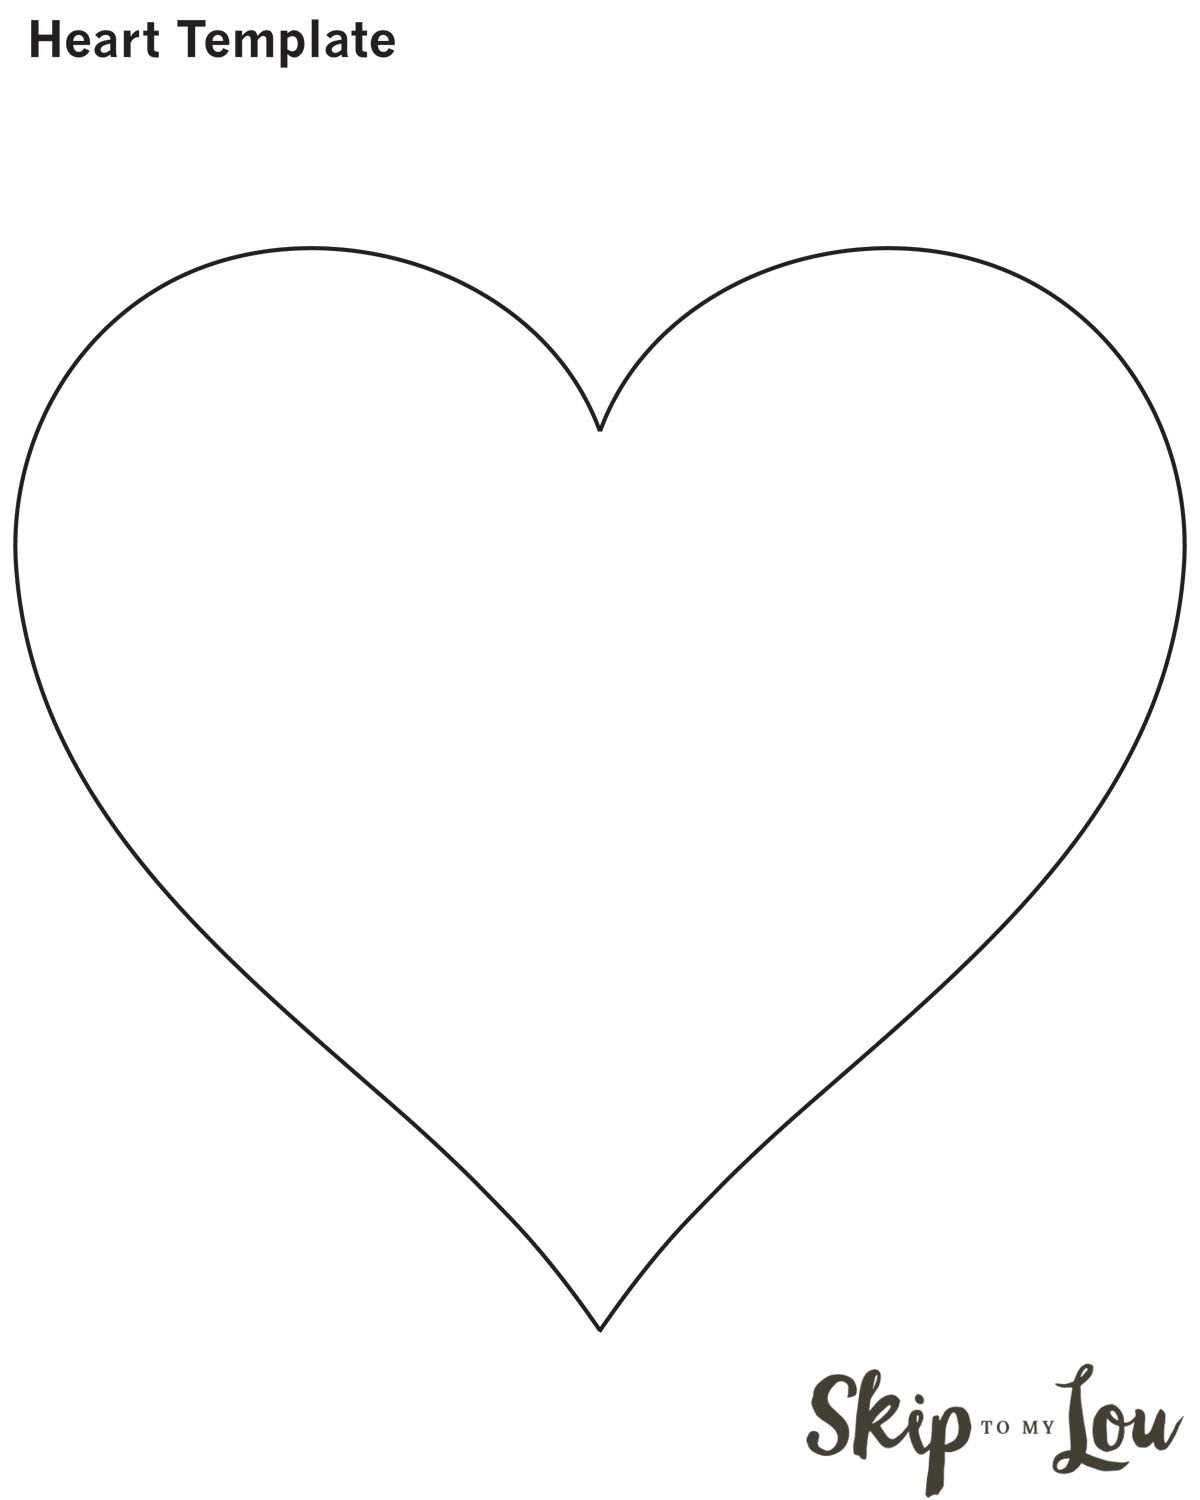 Valentine Heart Attack Idea With Free Printable Heart Template - Free Printable Valentine Heart Patterns